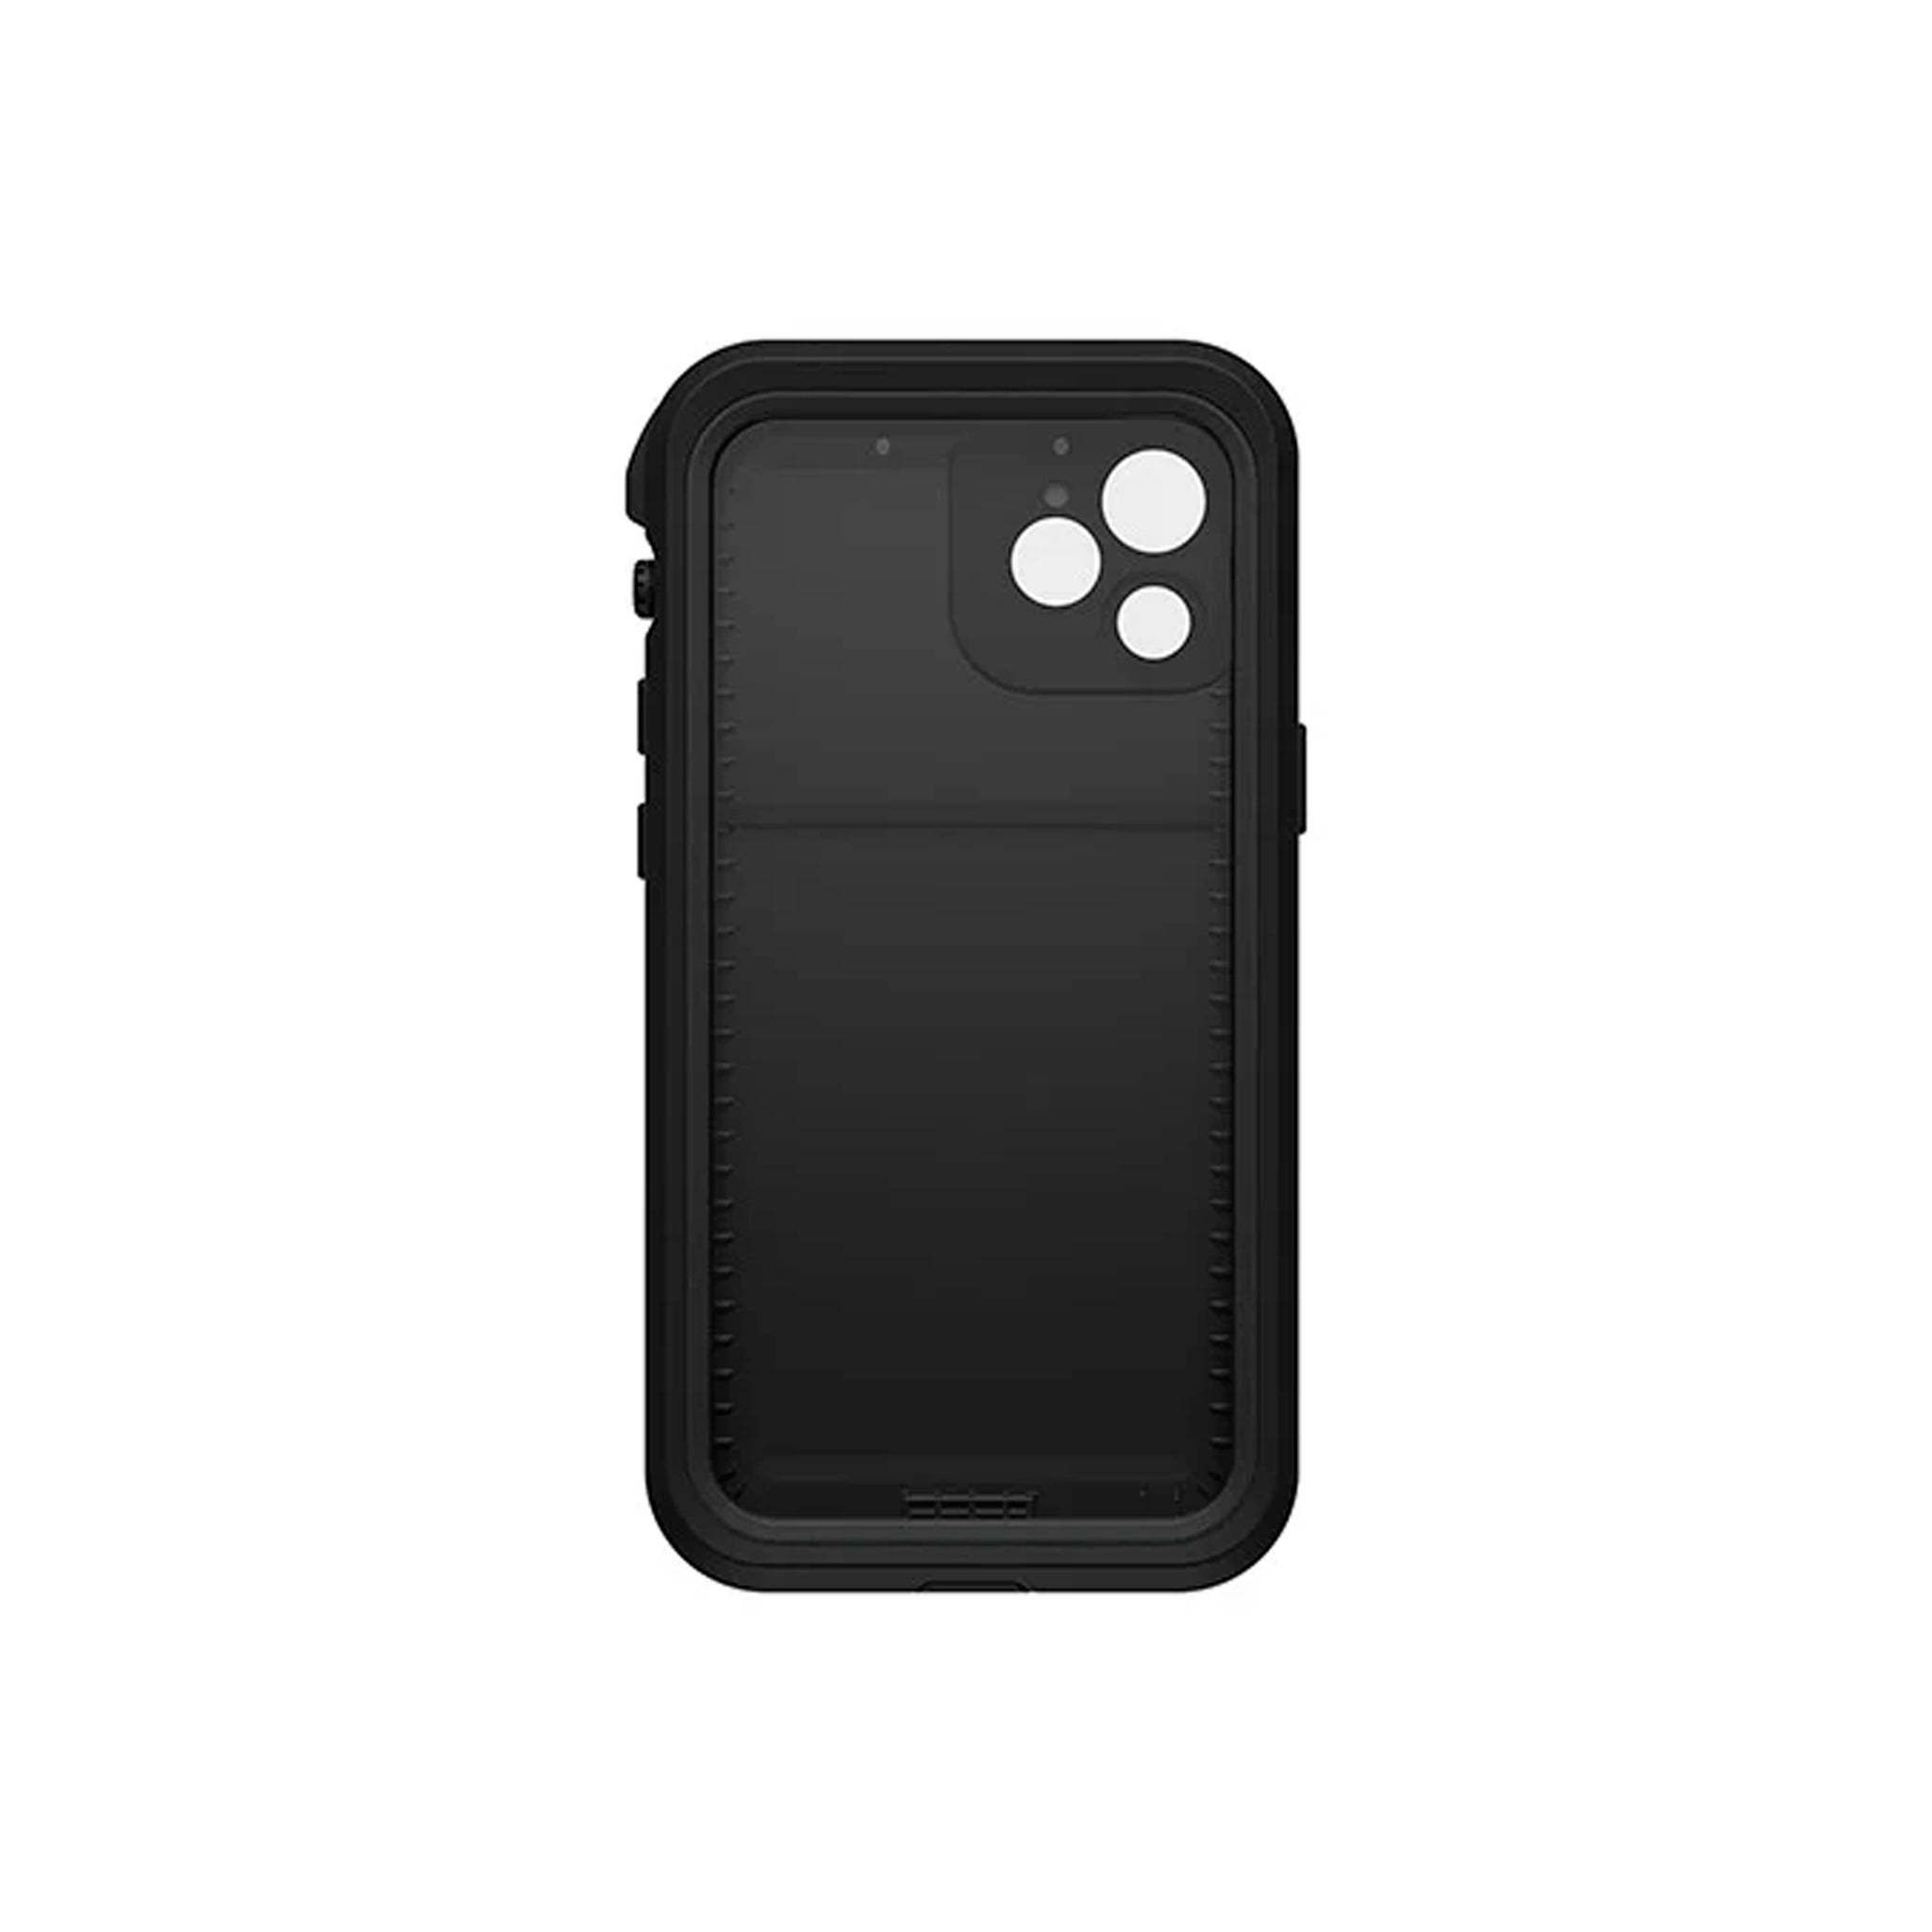 LifeProof -  Fre for iPhone 12 mini - Black